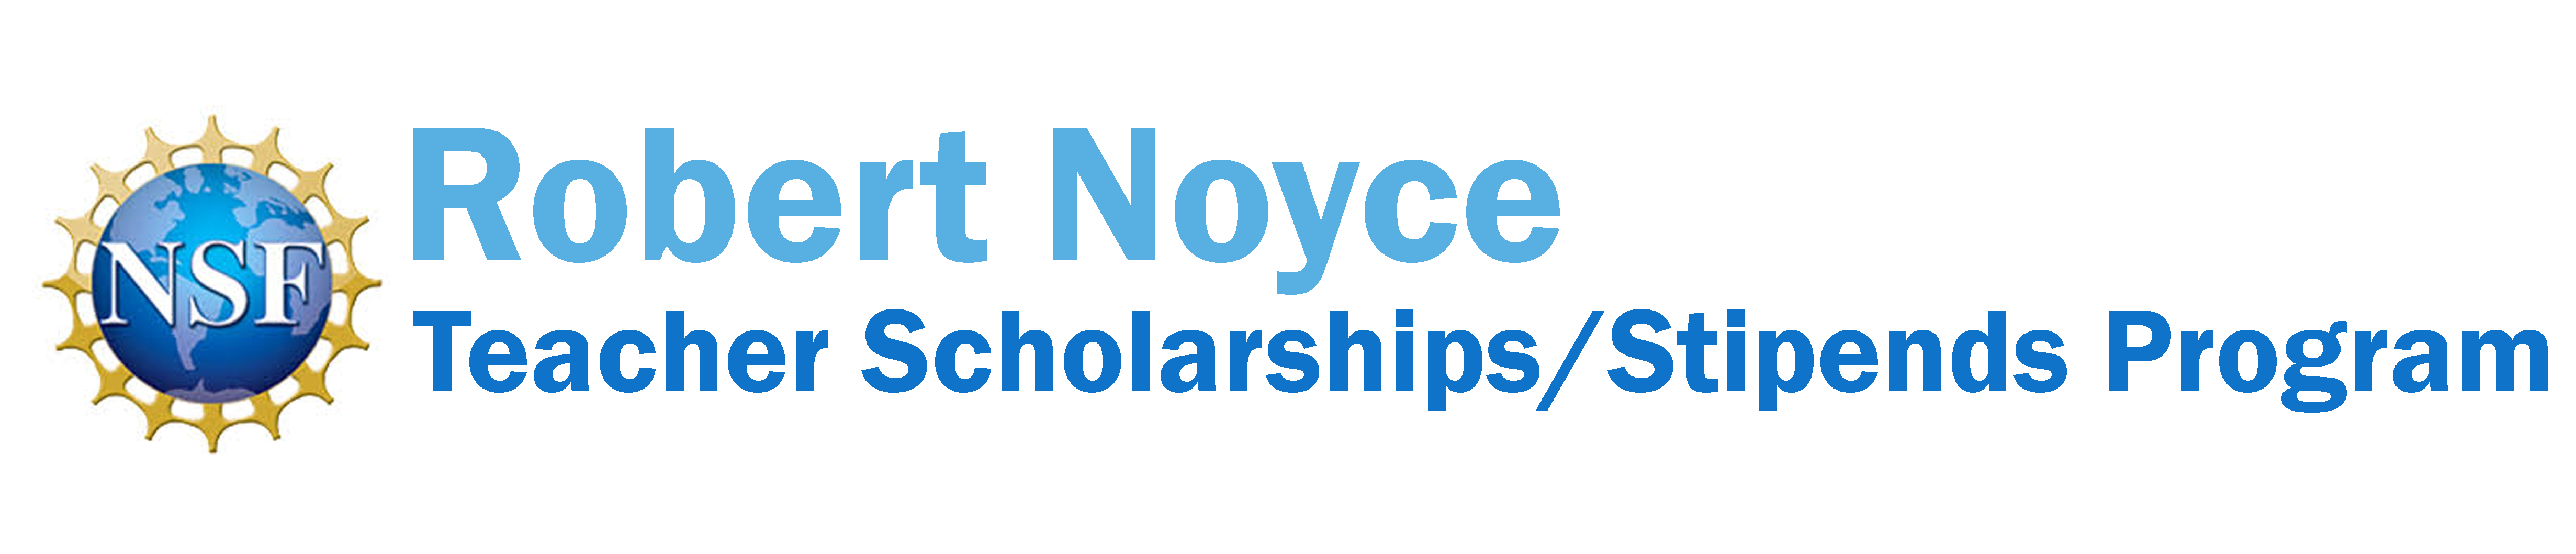 Robert Noyce Teacher Scholarships/Stipends Program